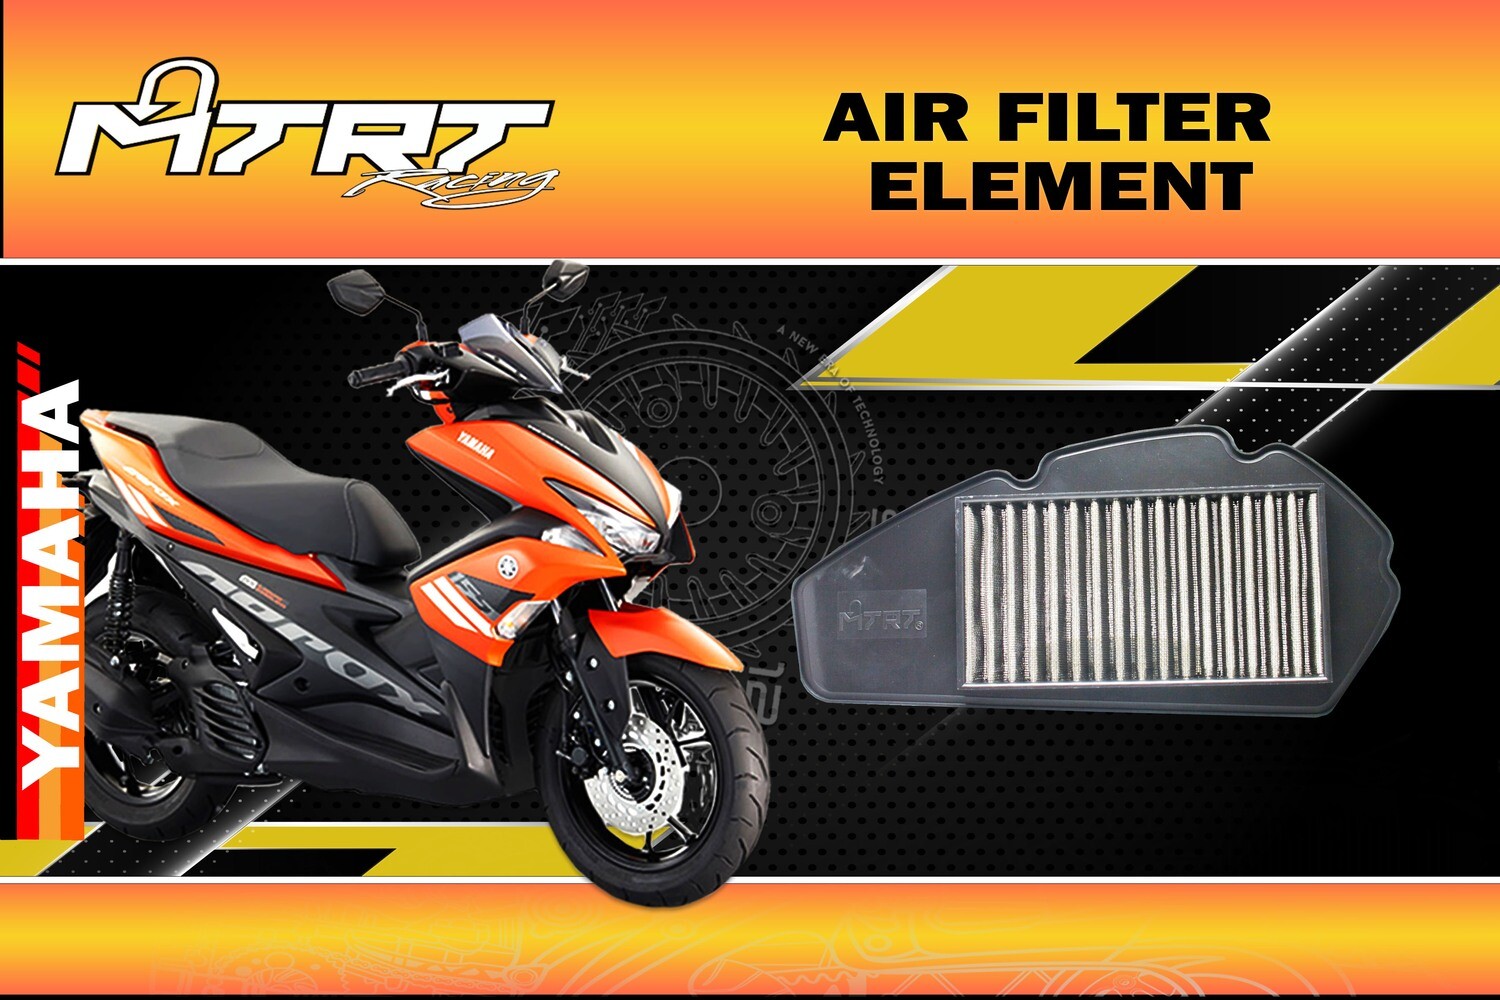 AIR FILTER AEROX Hi-flow filter